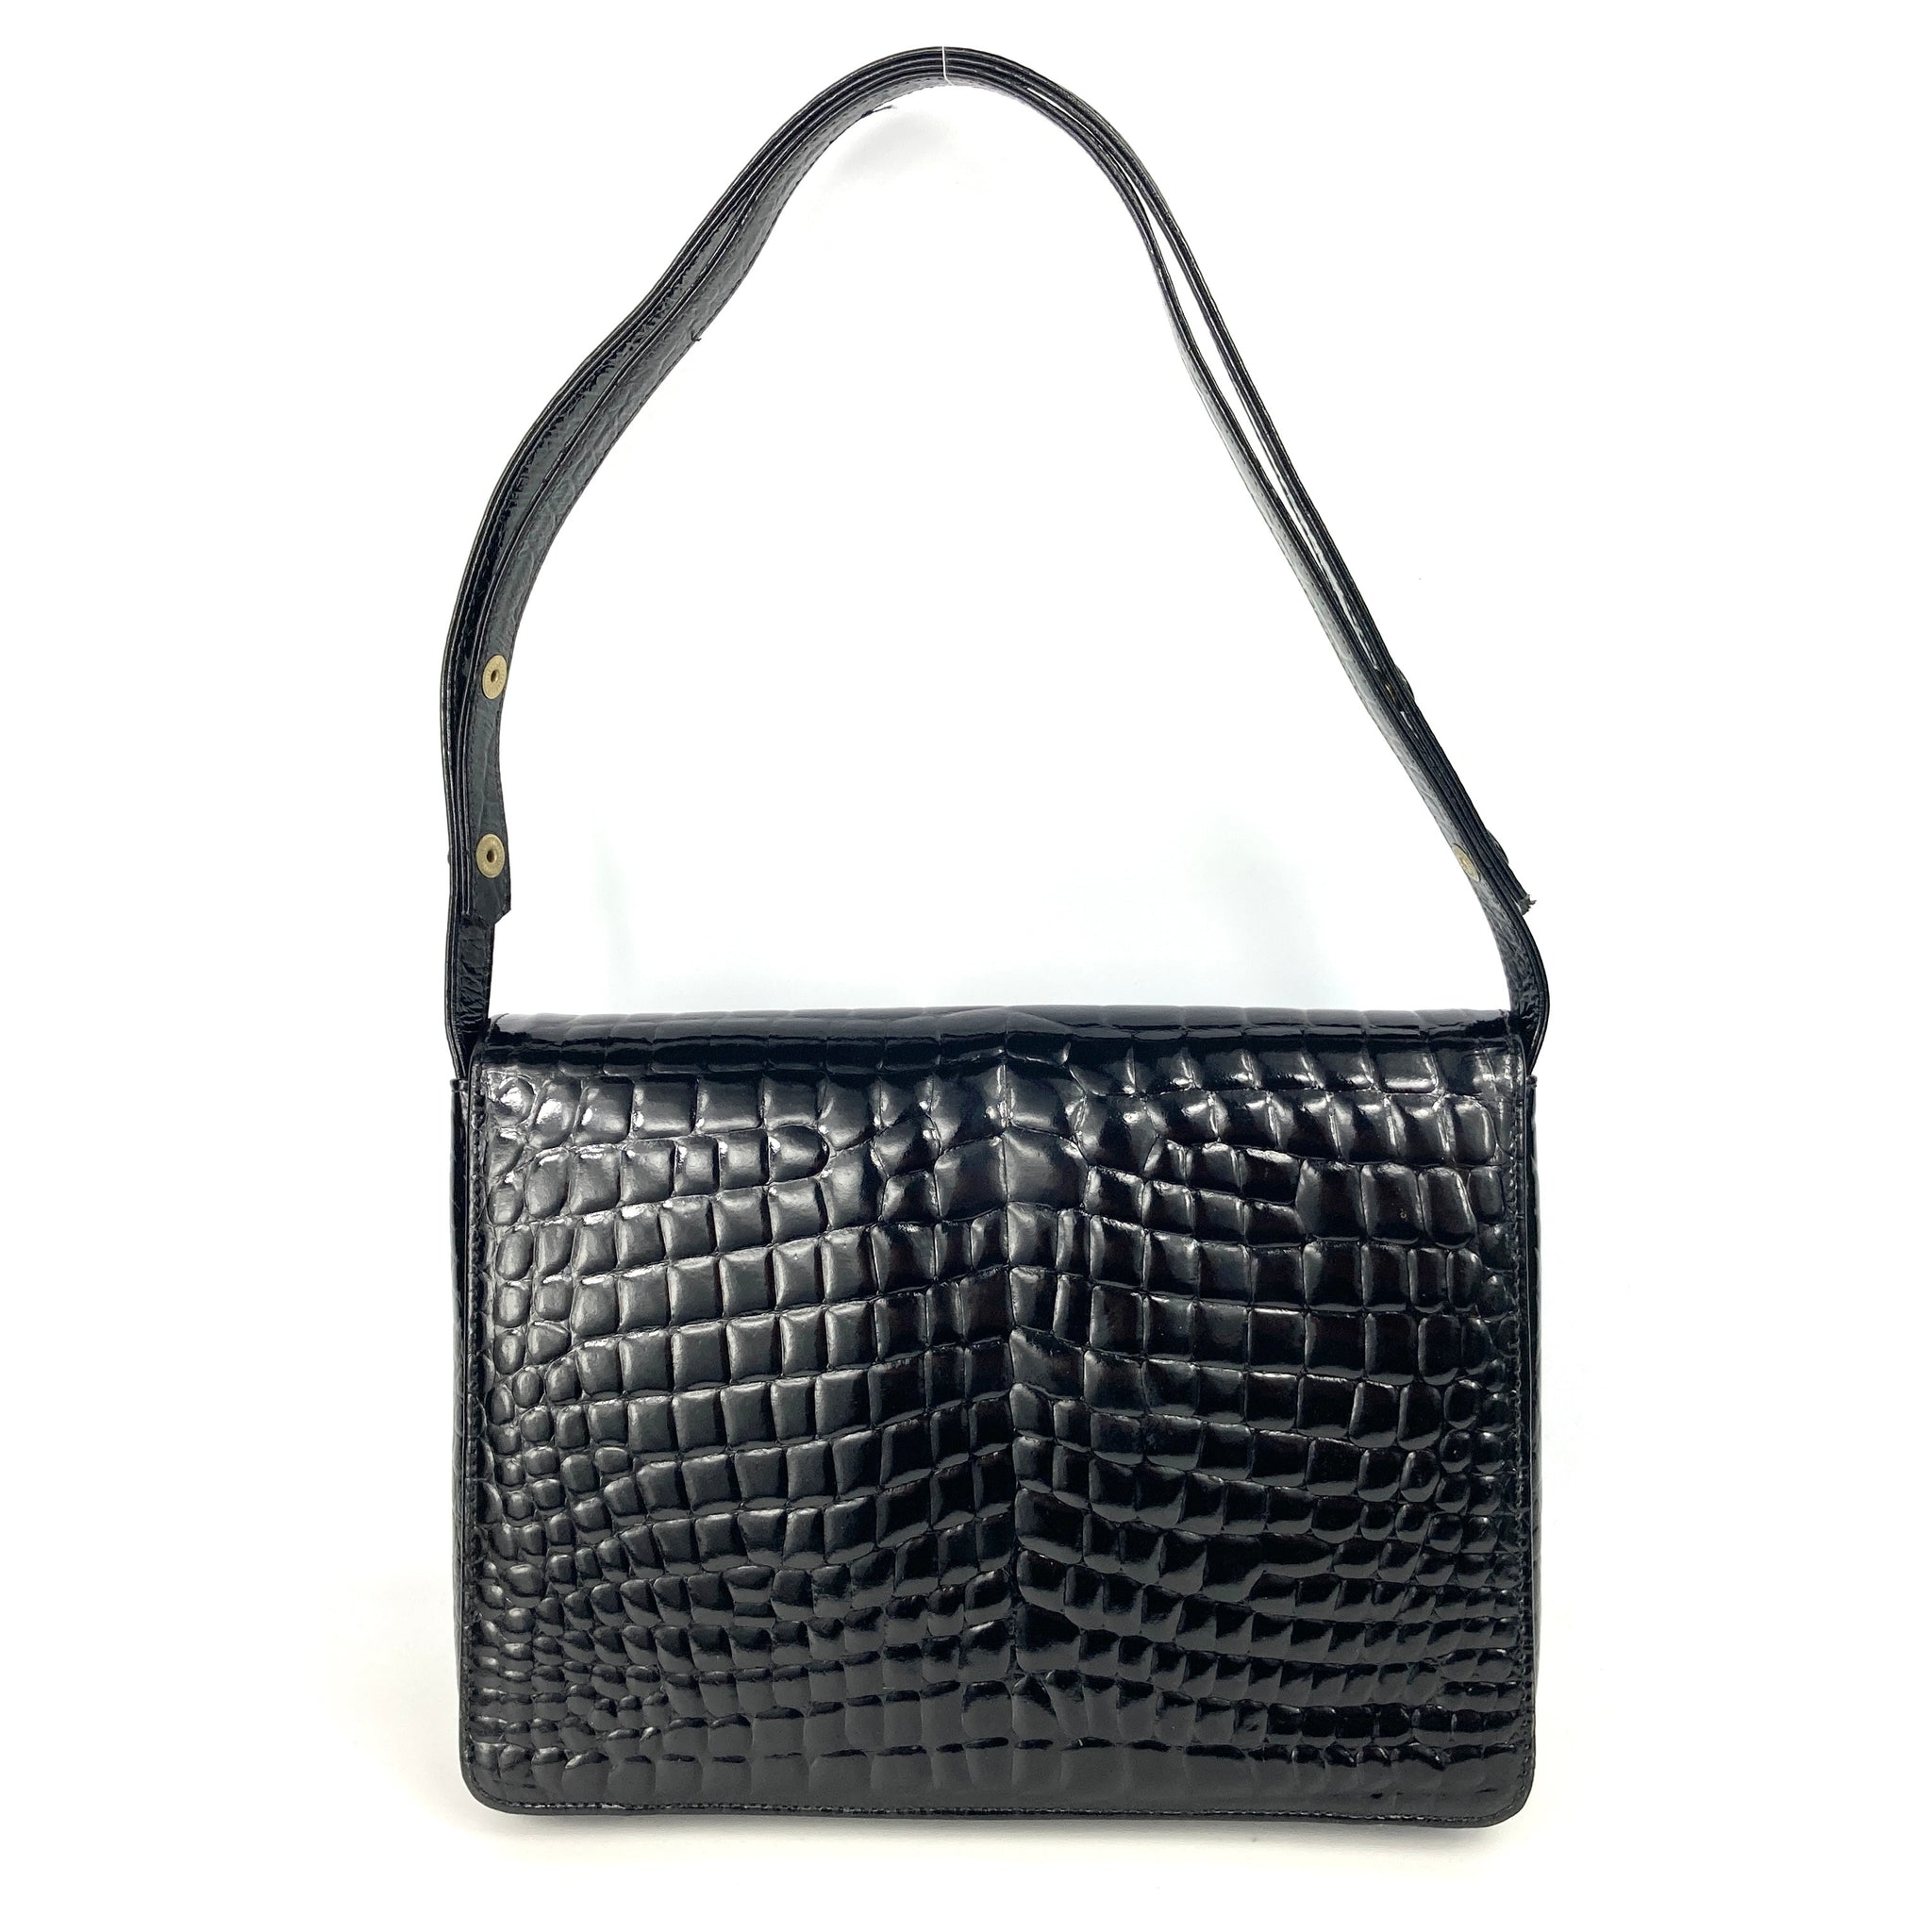 Stella Max Cream Faux alligator snake skin purse Handbag Shoulder | eBay